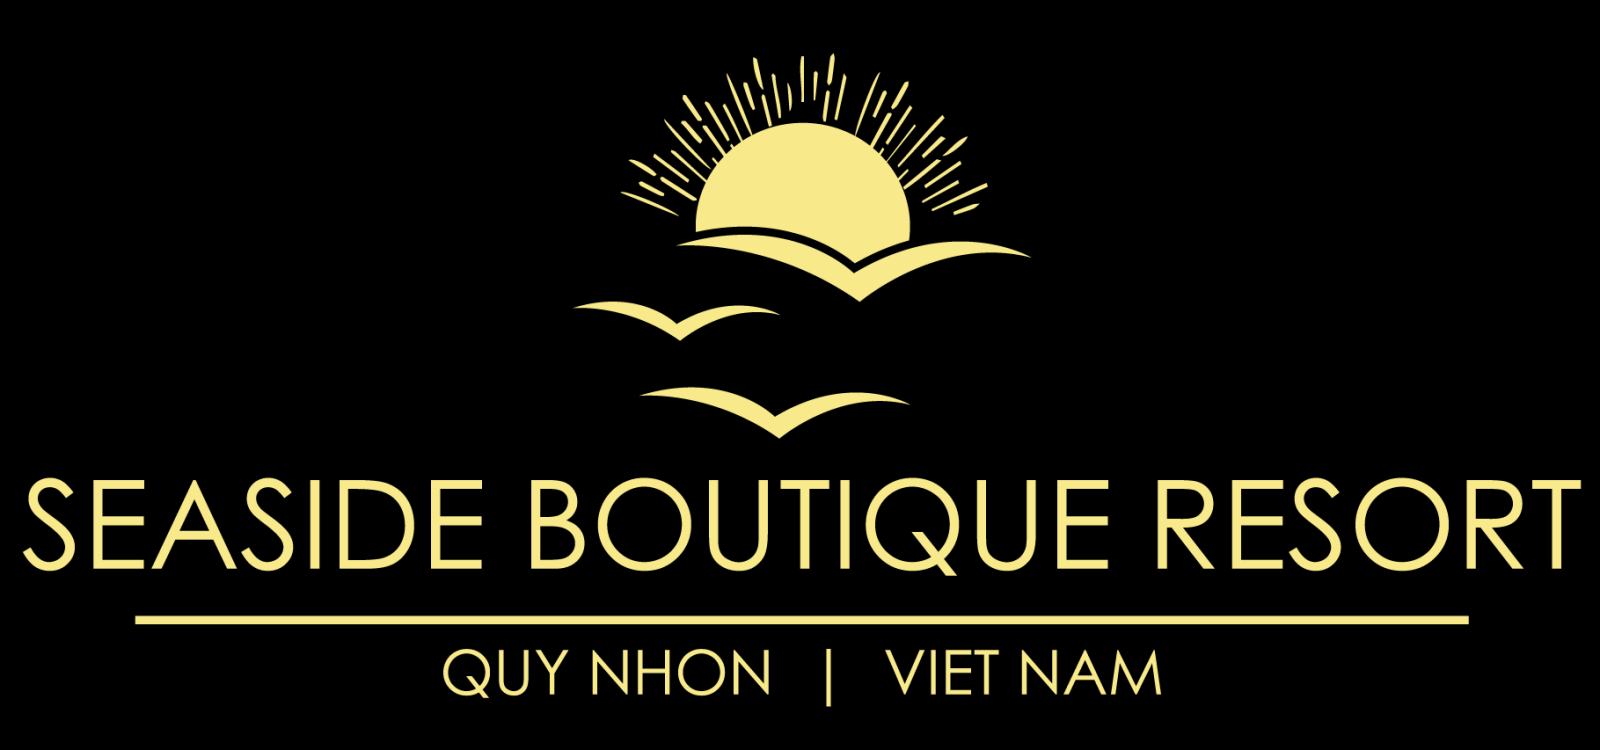 Seaside Boutique Resort in Quy Nhon